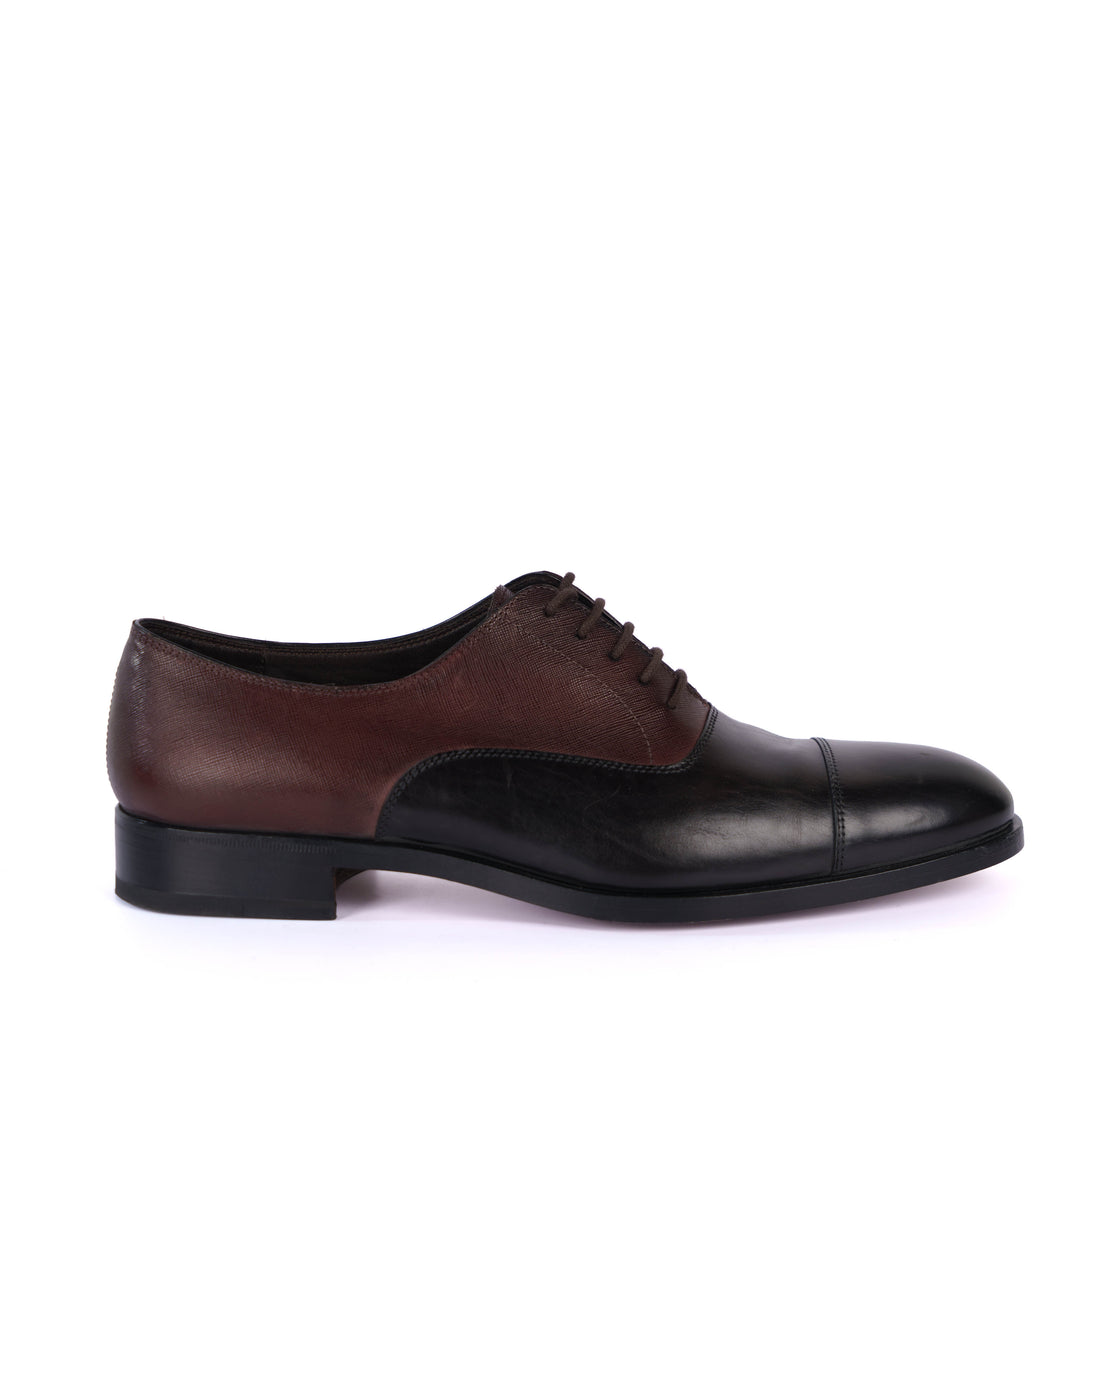 Black/Brown Oxford Shoes